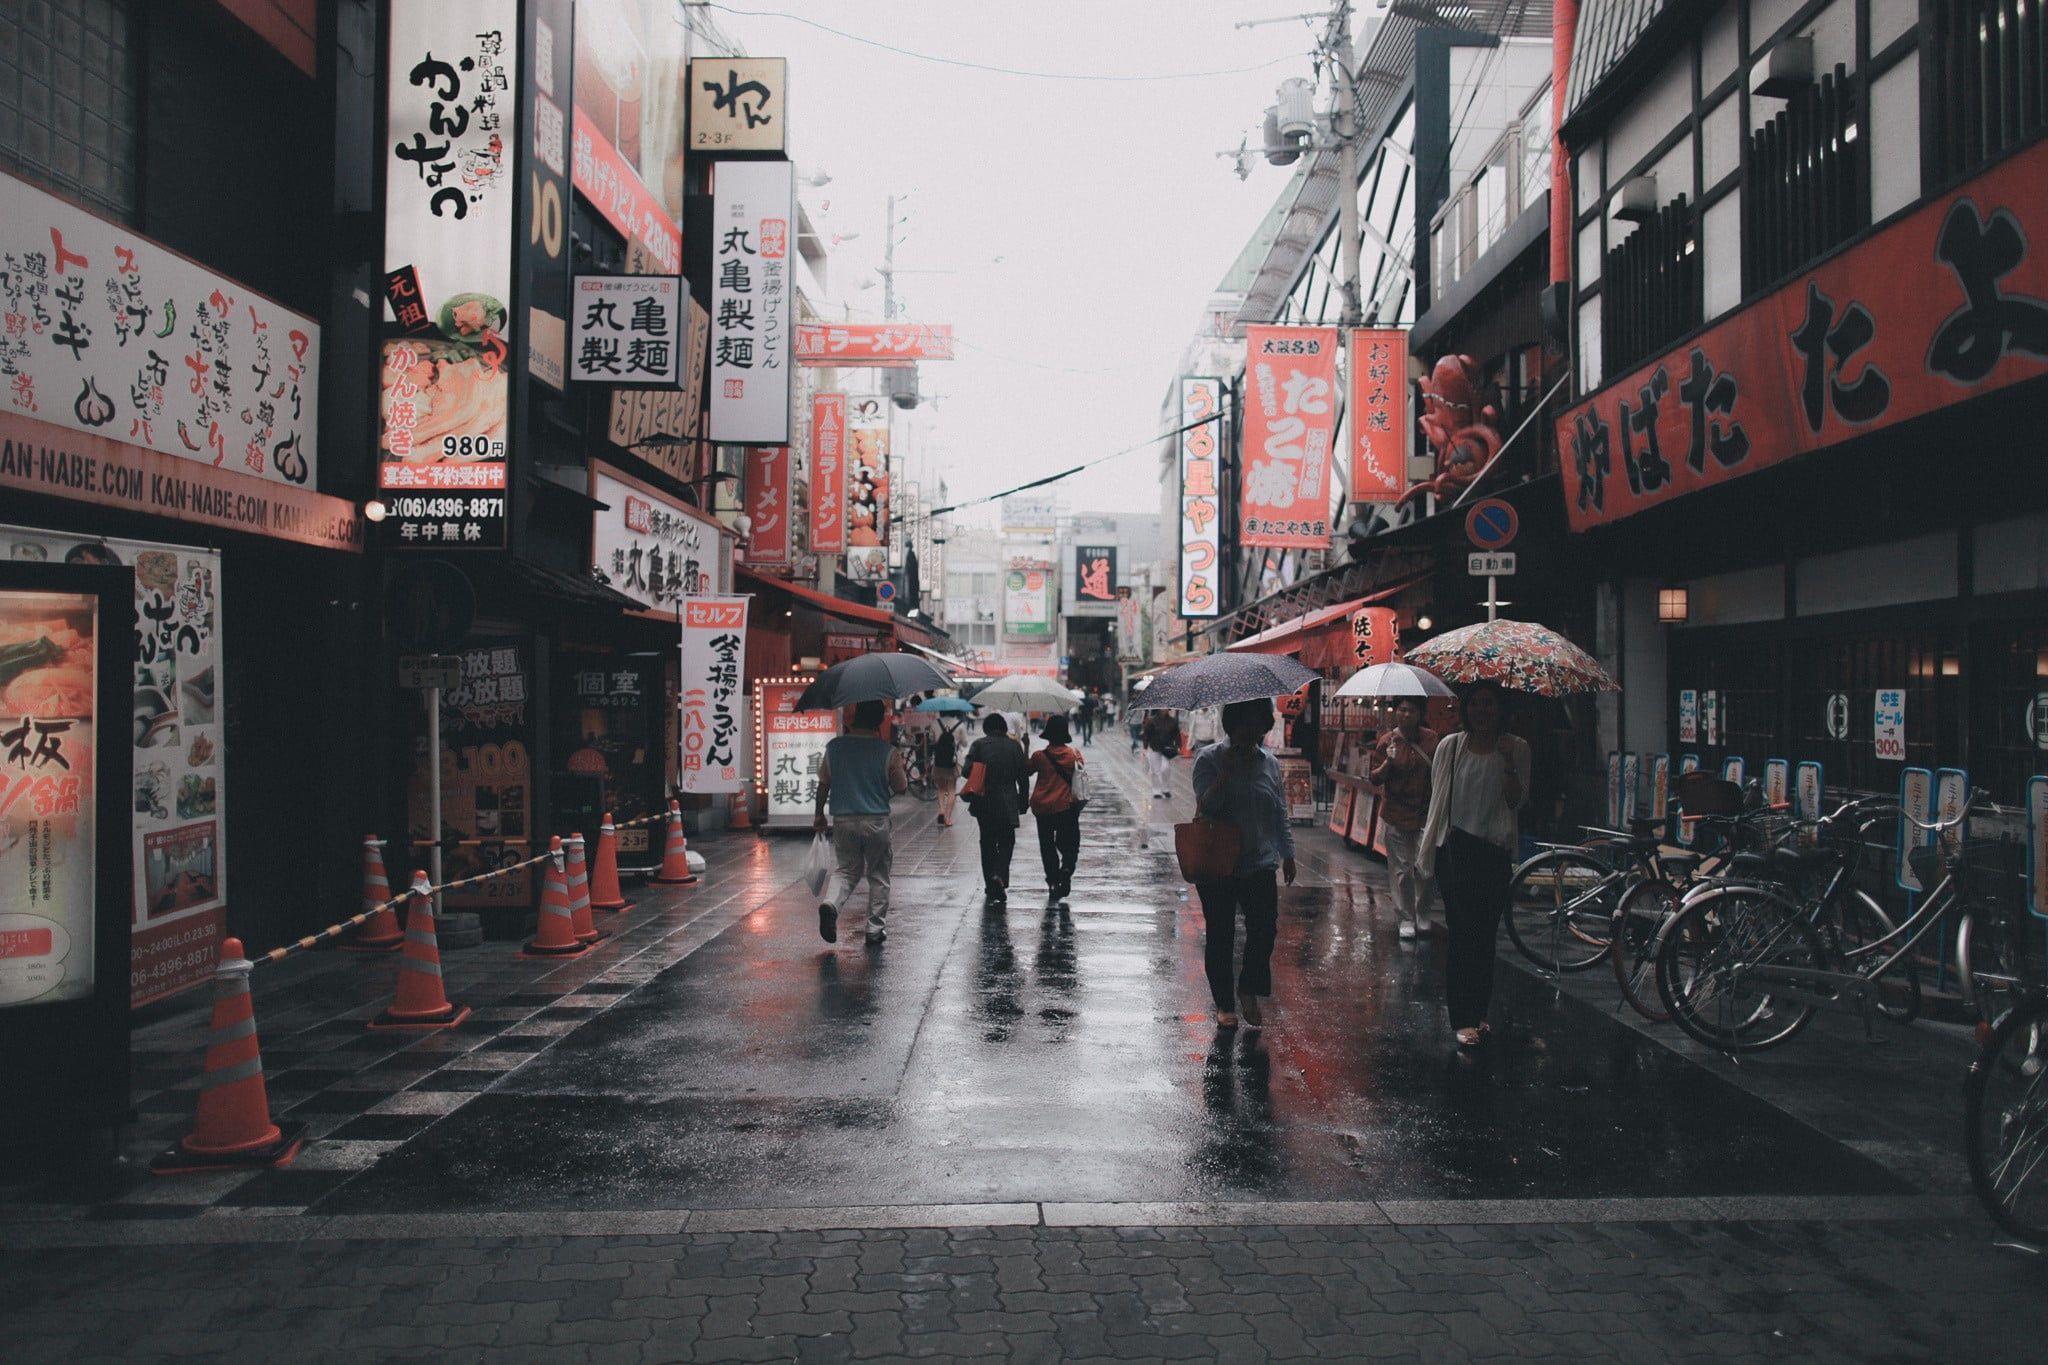 black umbrella #umbrella #Asian #street #Japan #Japanese P